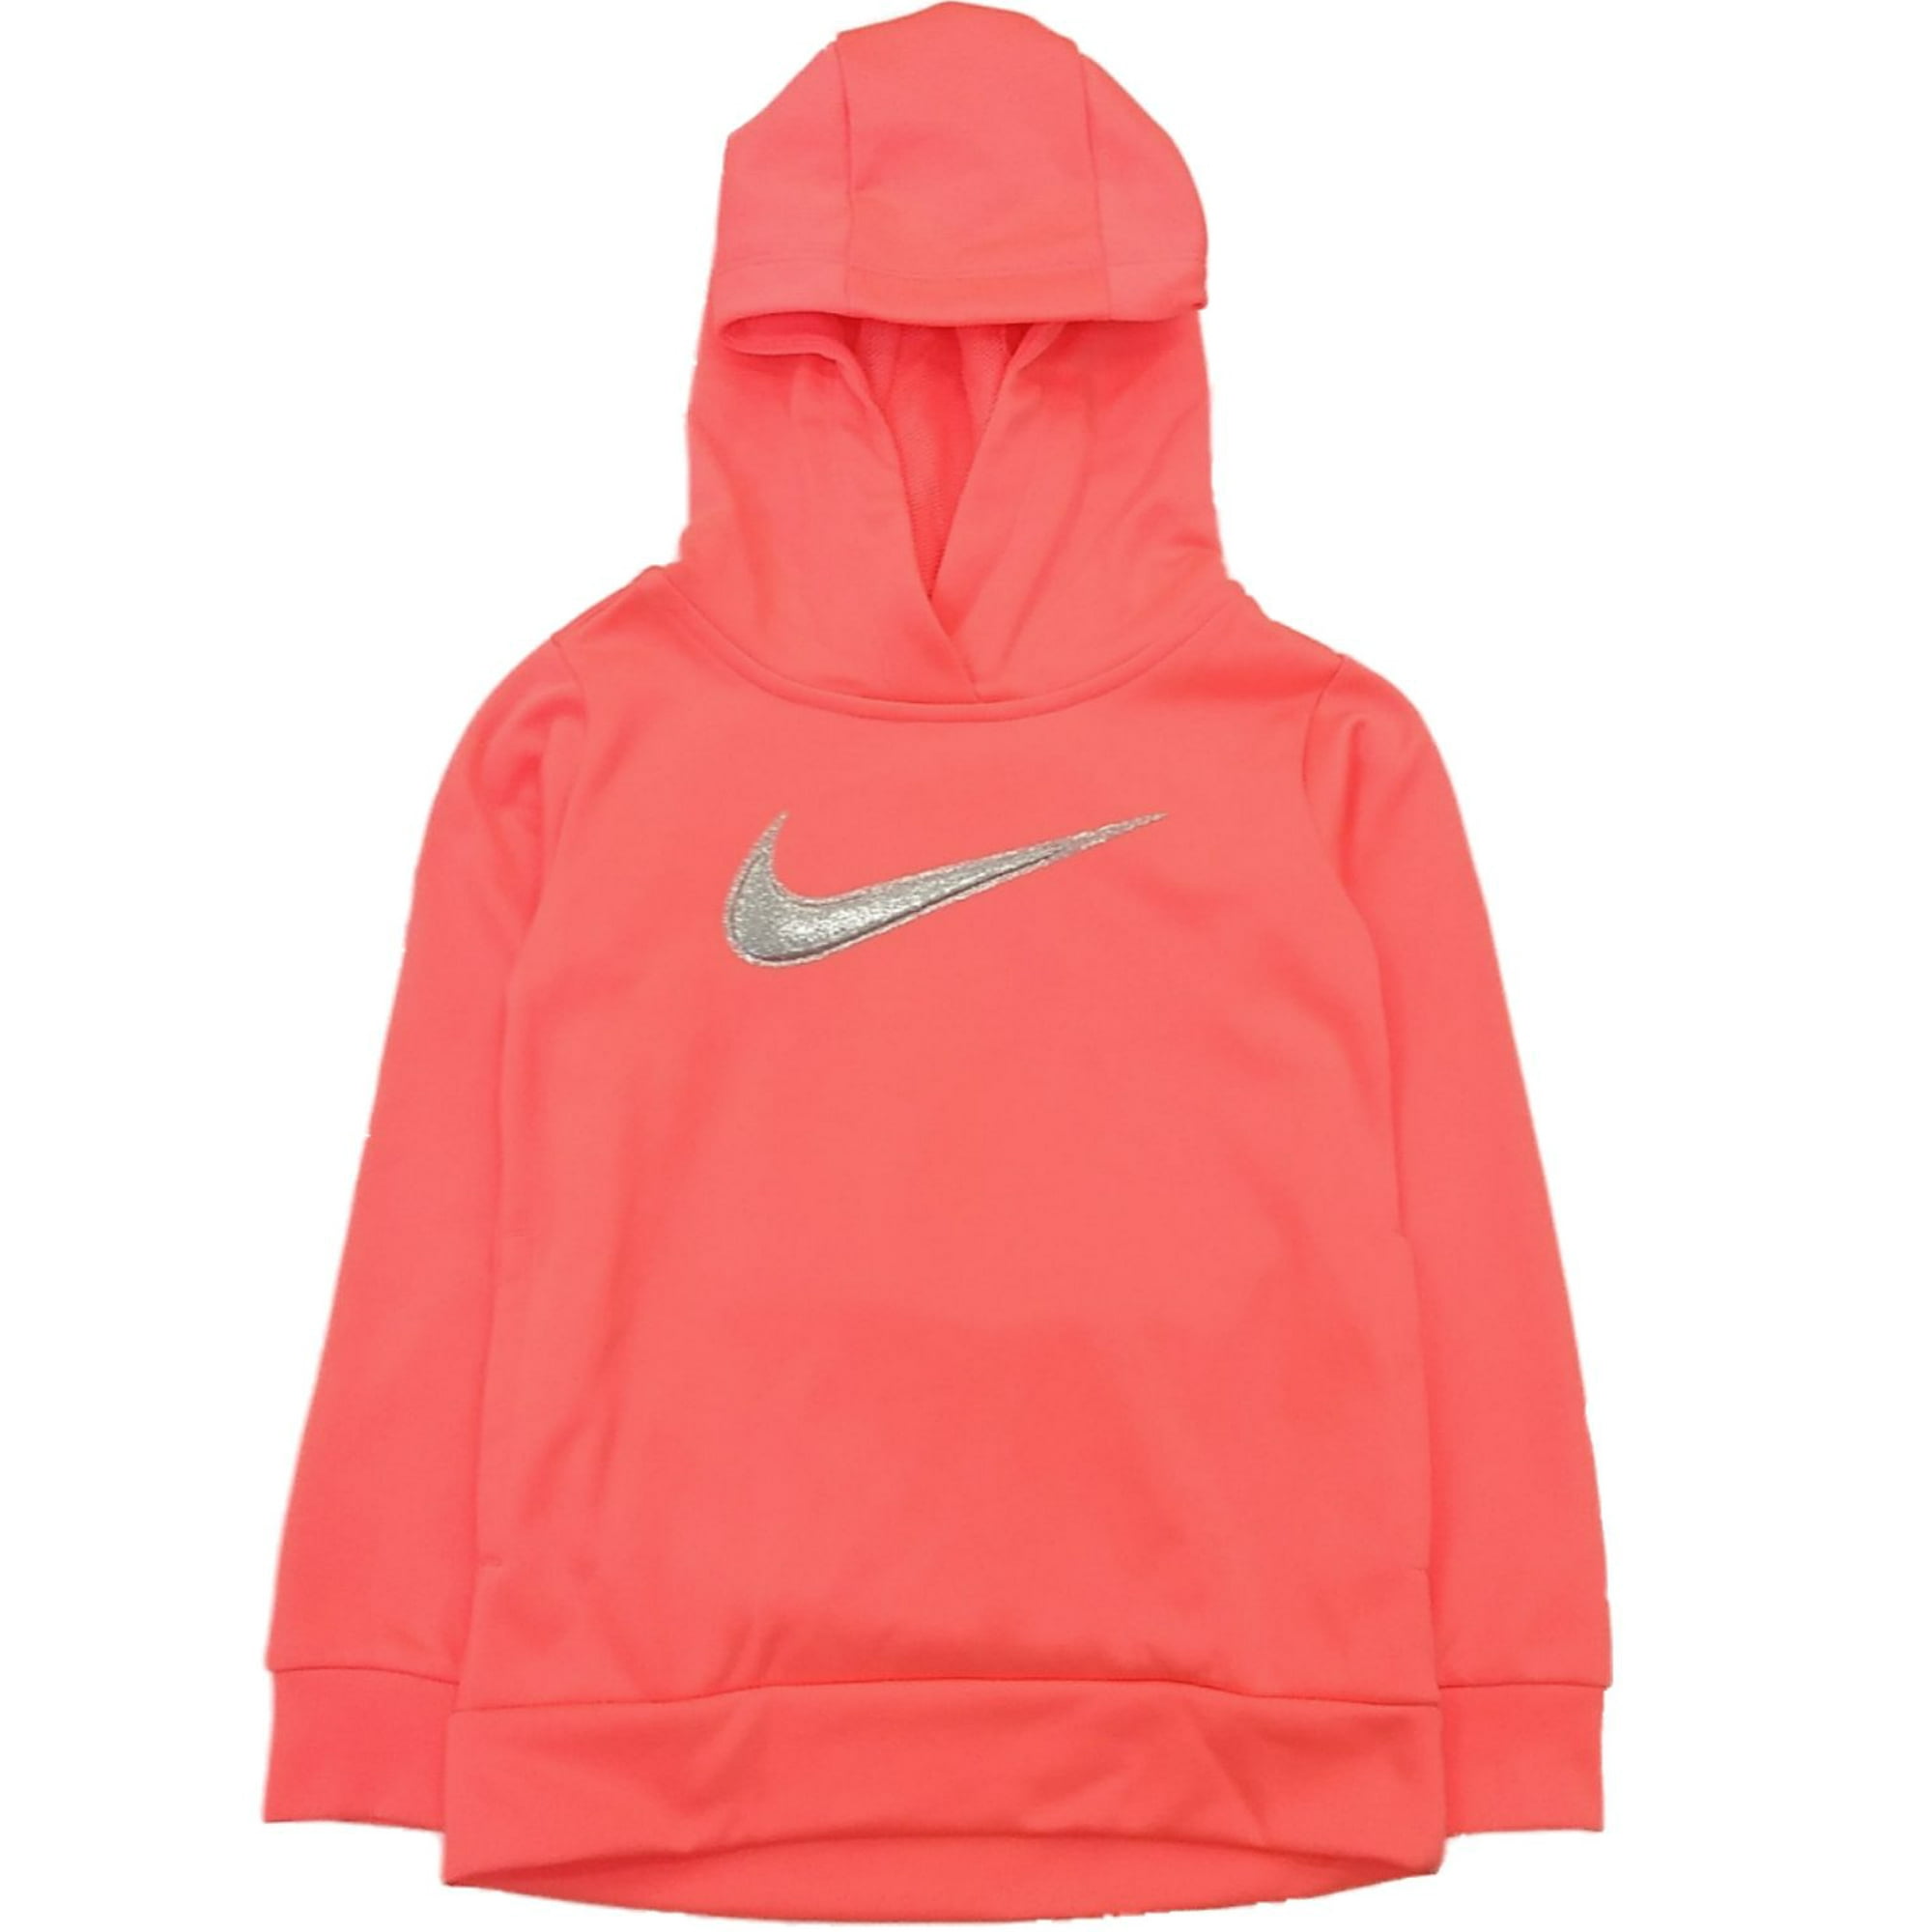 Nike Therma Girls Coral Peach Swoosh Hoodie Sweatshirt Jacket Dri-fit XS  (4) 